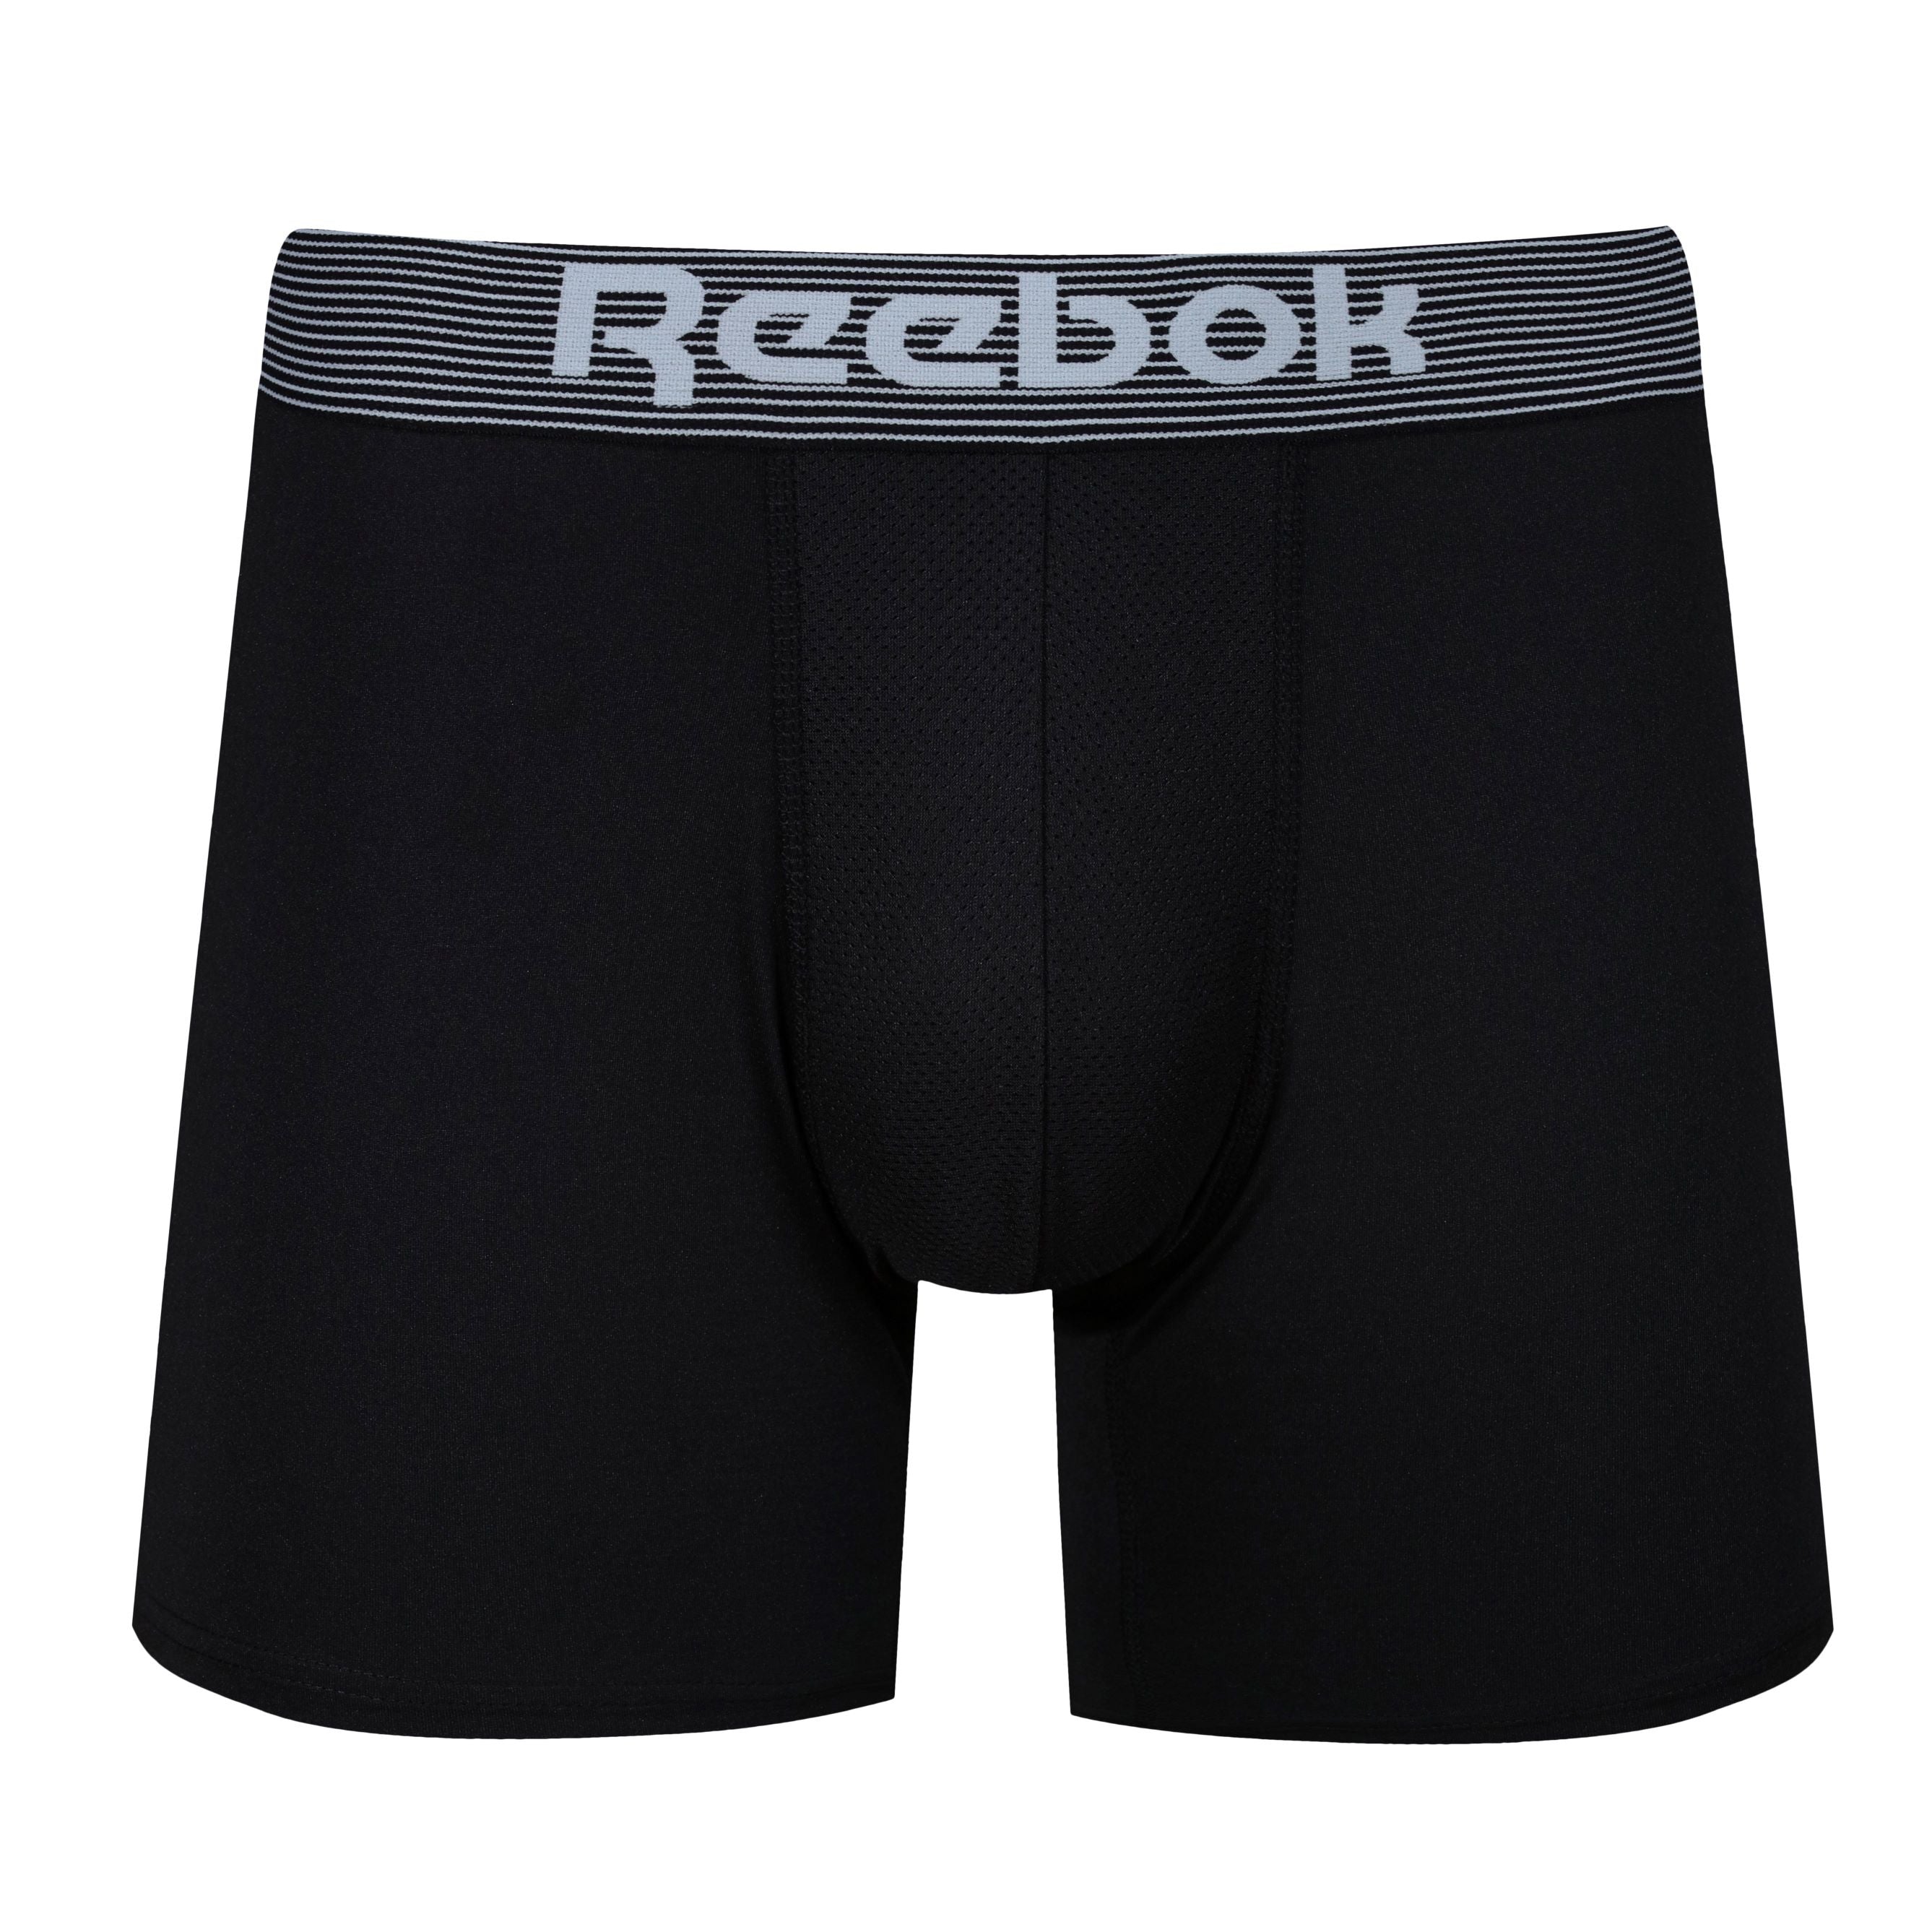 Reebok Mens Performance 3 Pack Medium Sports Trunks - Black